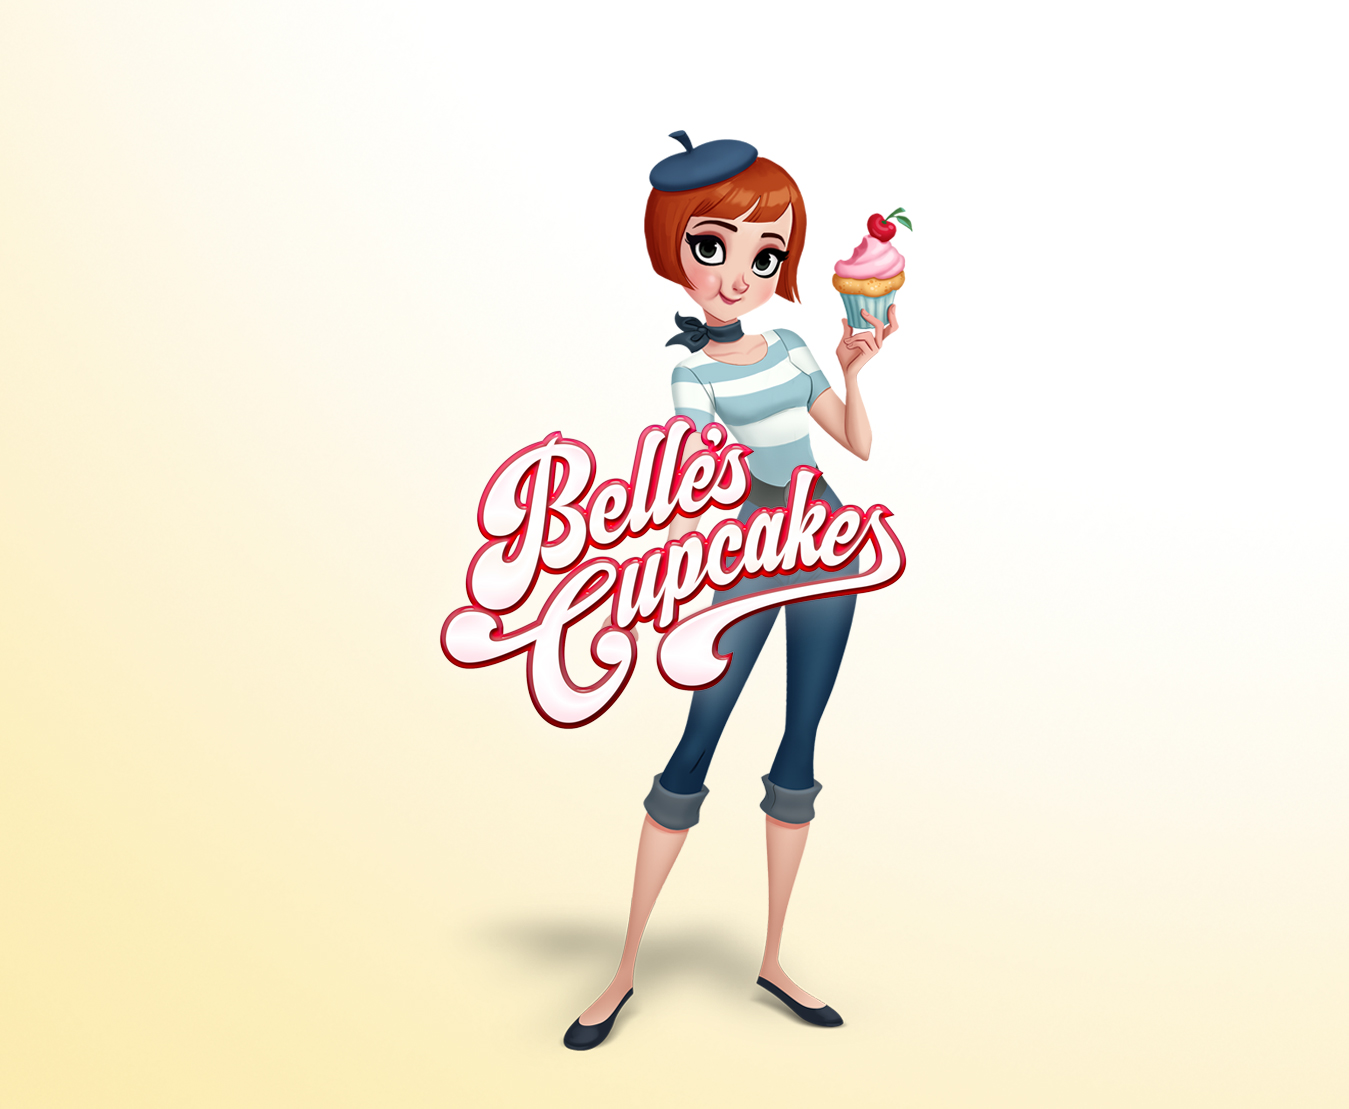 Belle’s Cupcakes - West Pier Gaming original IP. Features: Respin, Win Multipliers, Cake Meter, Match 3 Bonus Game